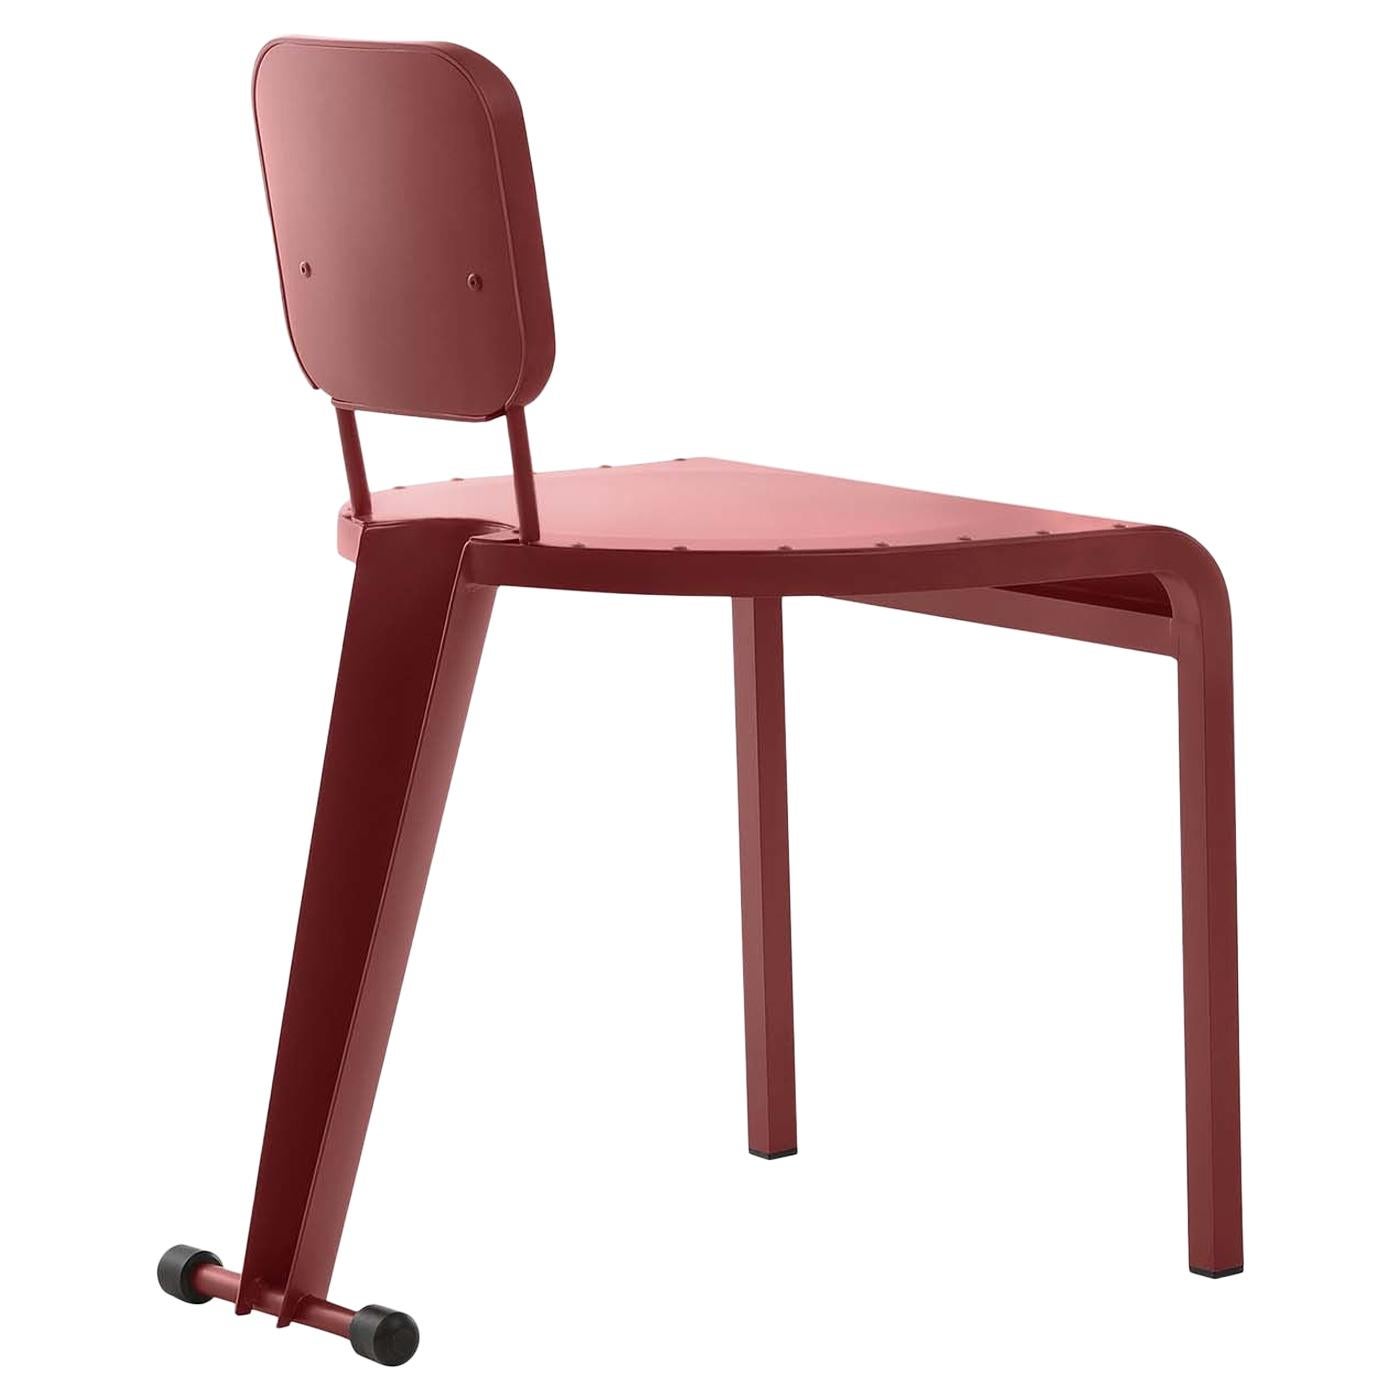 Rock Red Chair de Marc Sadler